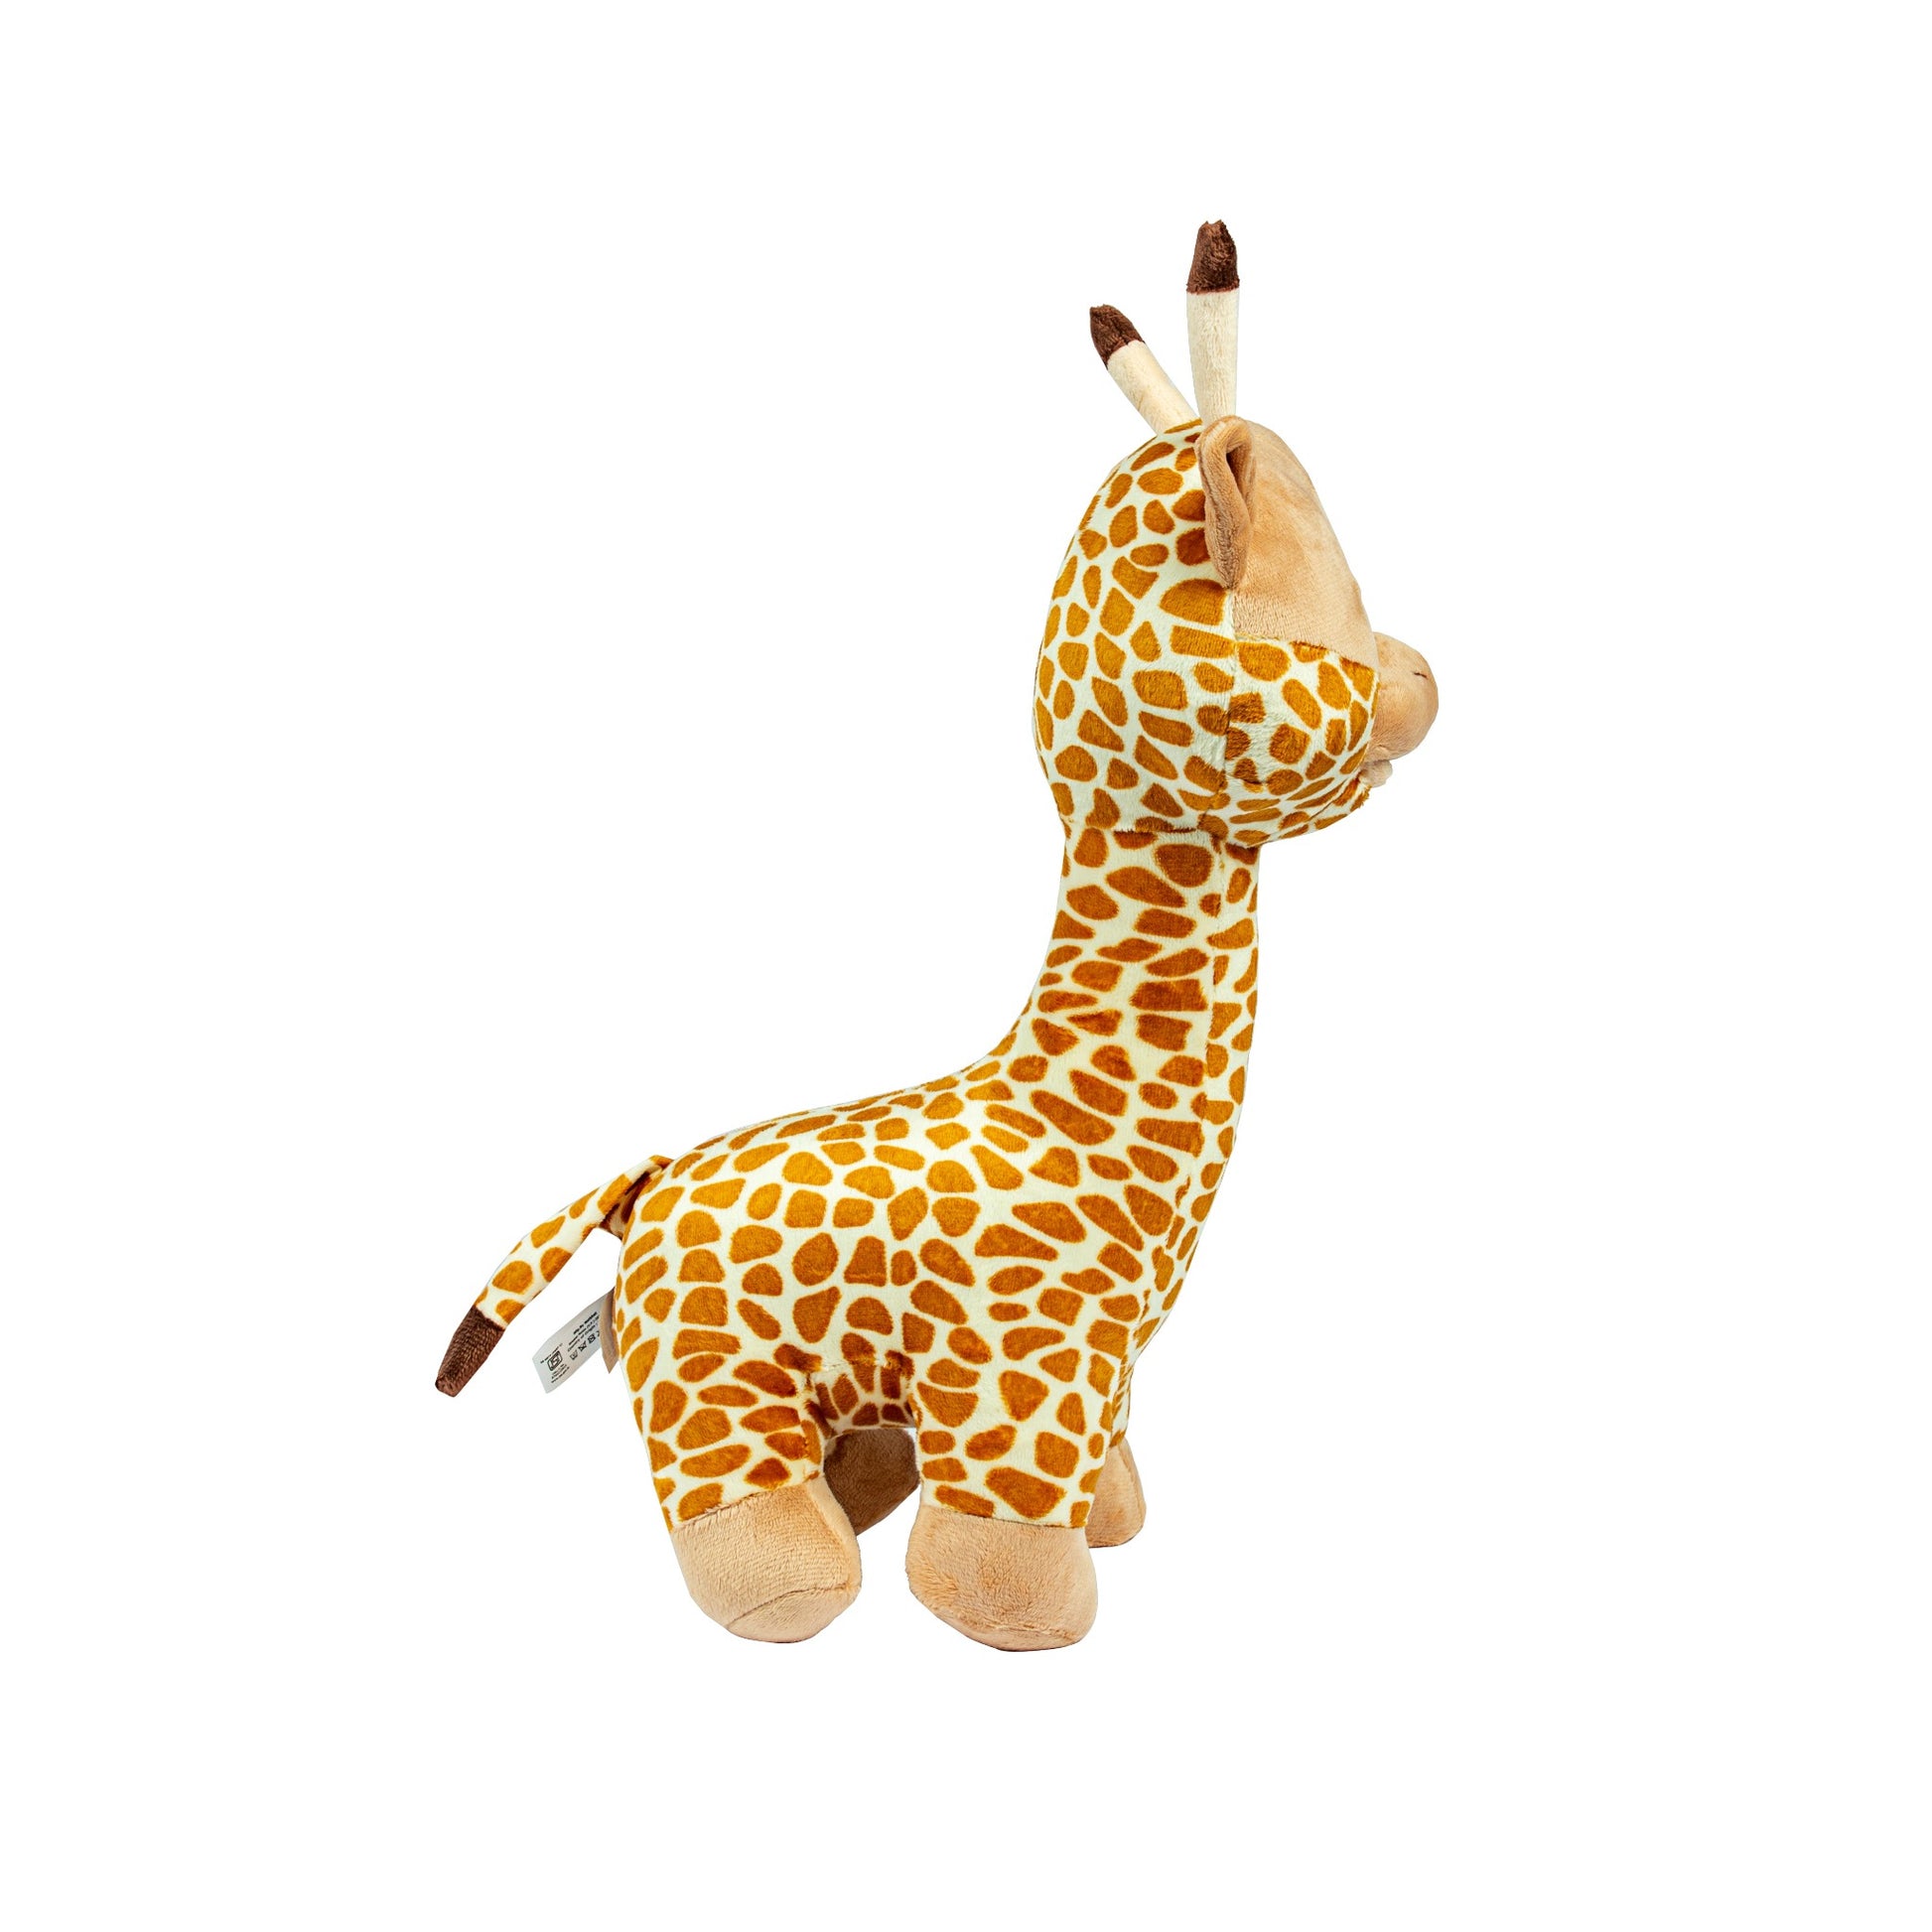 Jehlani the Giraffe | 18 Inch Stuffed Animal Plush | By Tiger Tale Toys